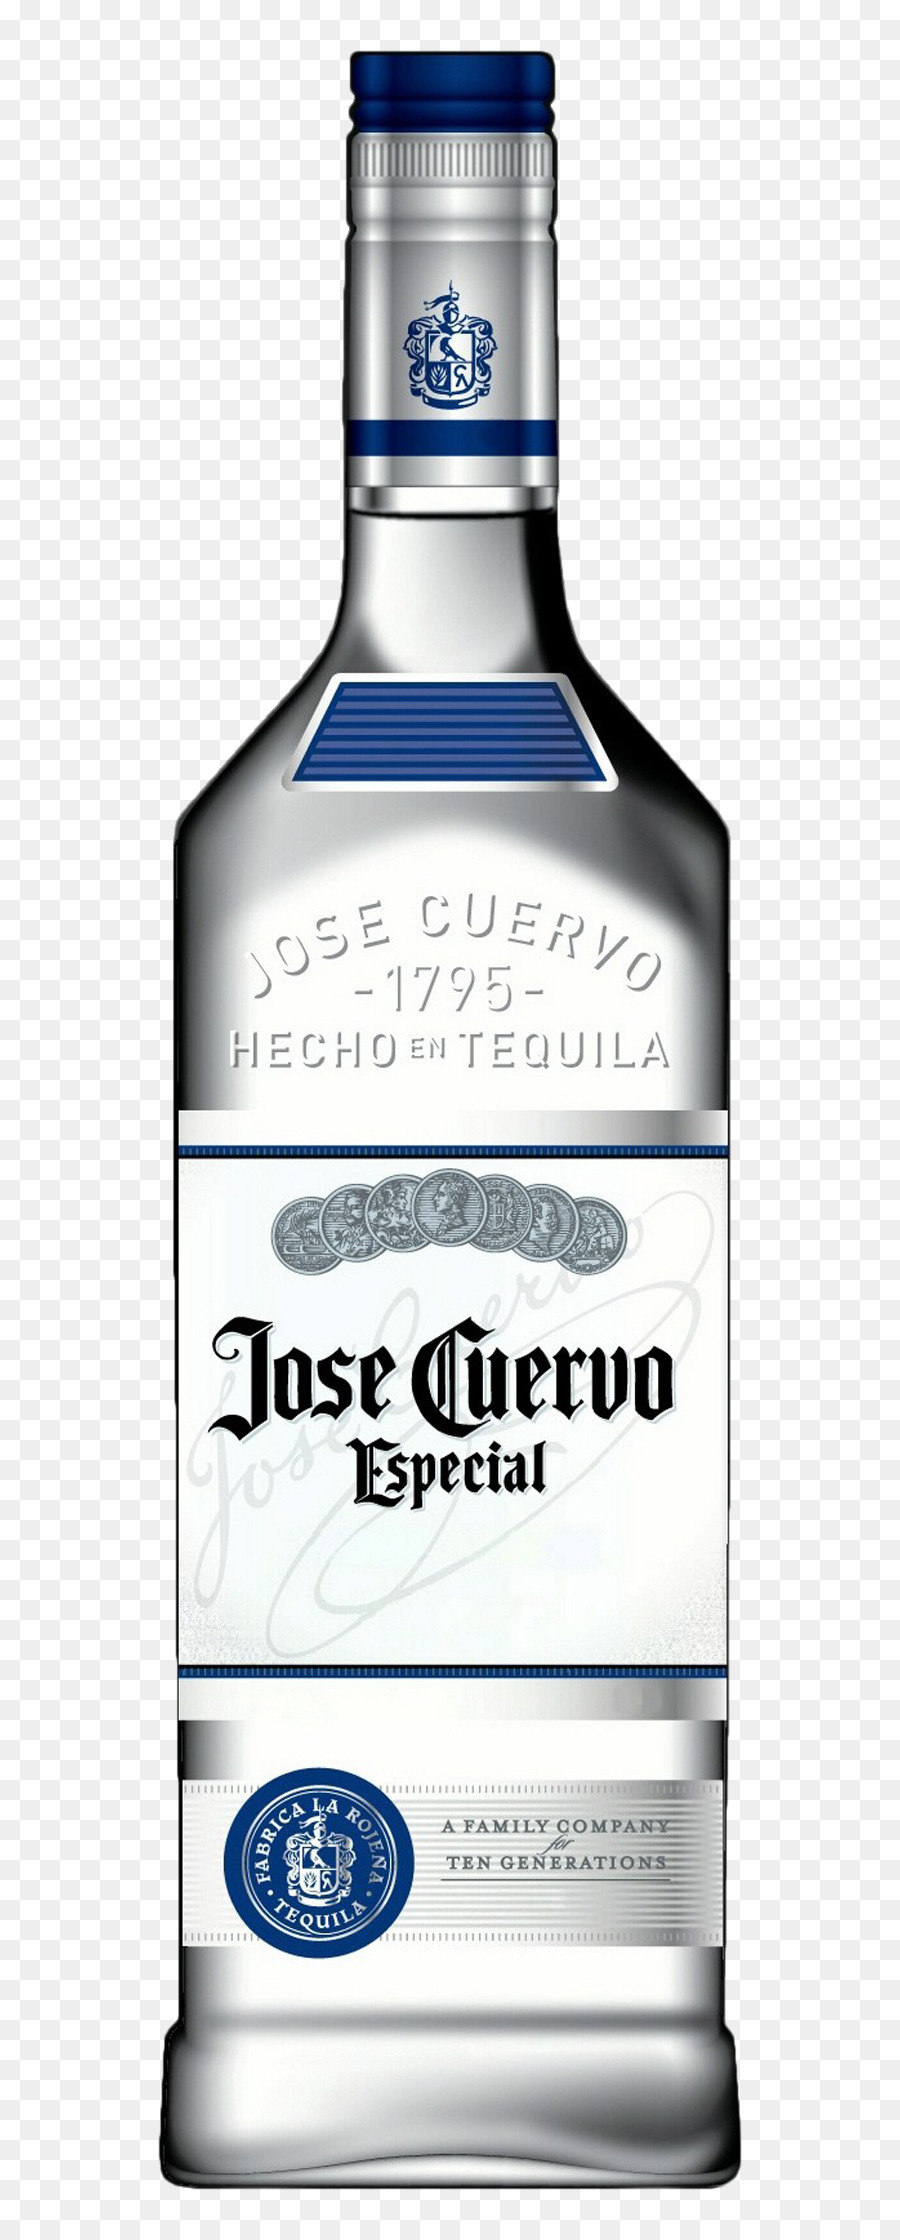 Jose Cuervo Special Silver Tequila, Liquor Jose Cuervo Special Silver Tequila - Tequila